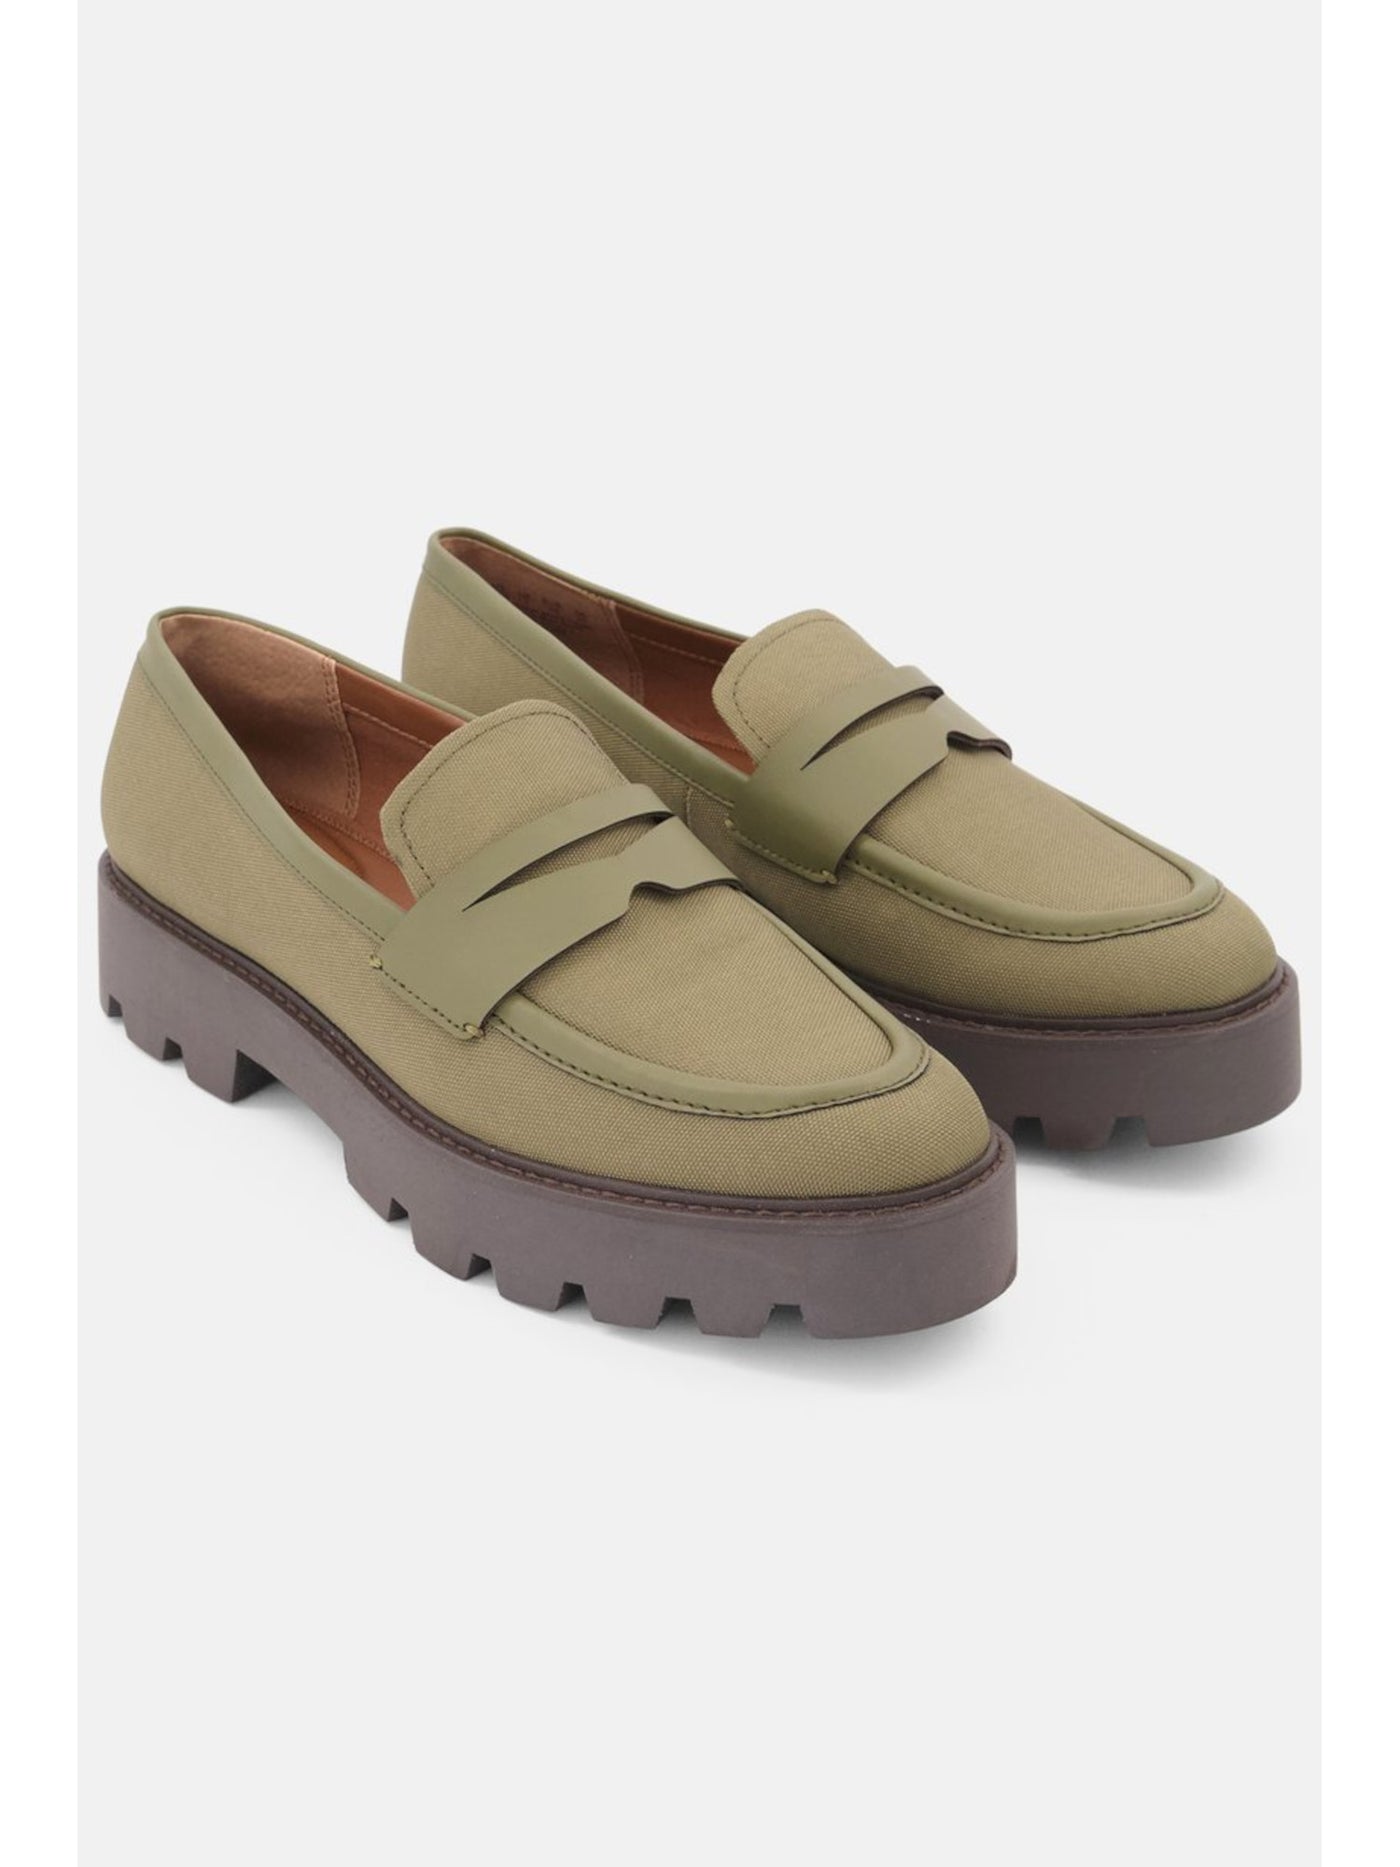 FRANCO SARTO Womens Green 1" Platform Penny Keeper Lug Sole Cushioned Balin Round Toe Block Heel Slip On Loafers Shoes 6 M